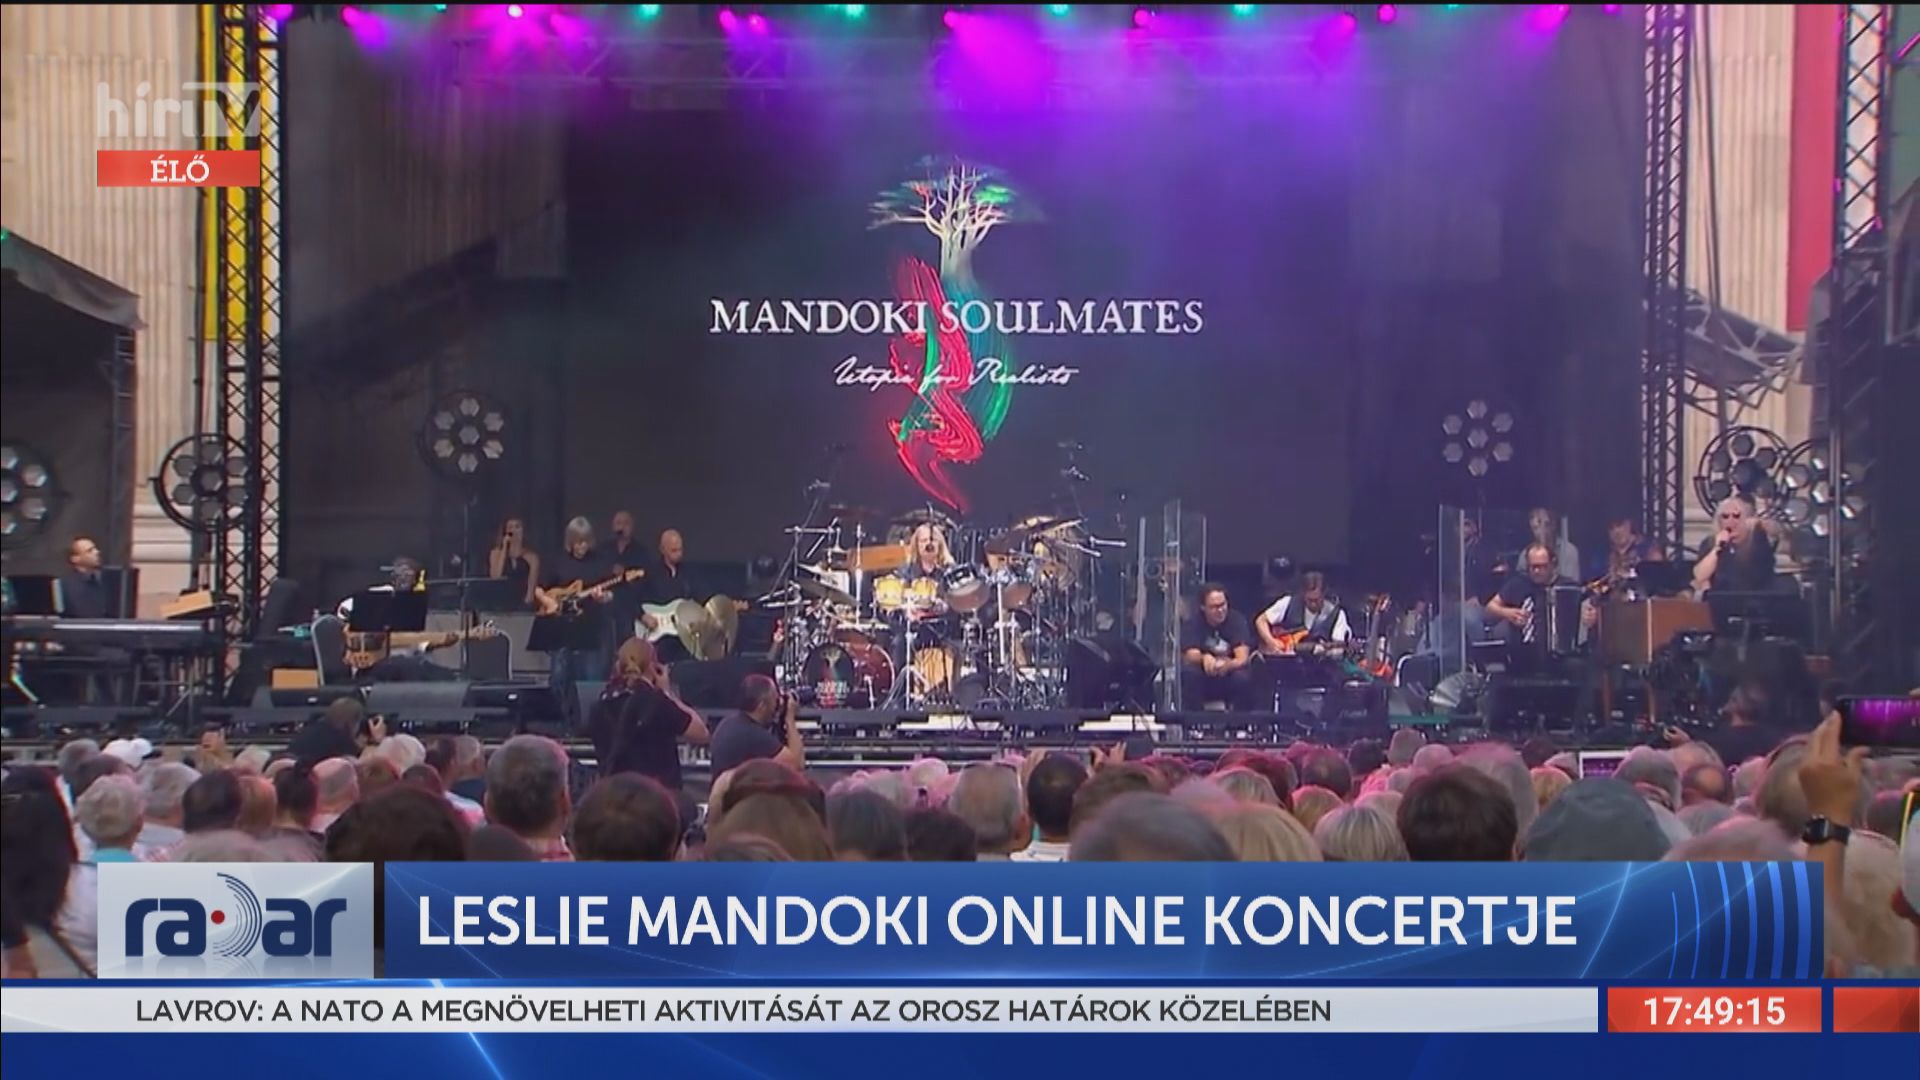 Radar - Leslie Mandoki online koncertje